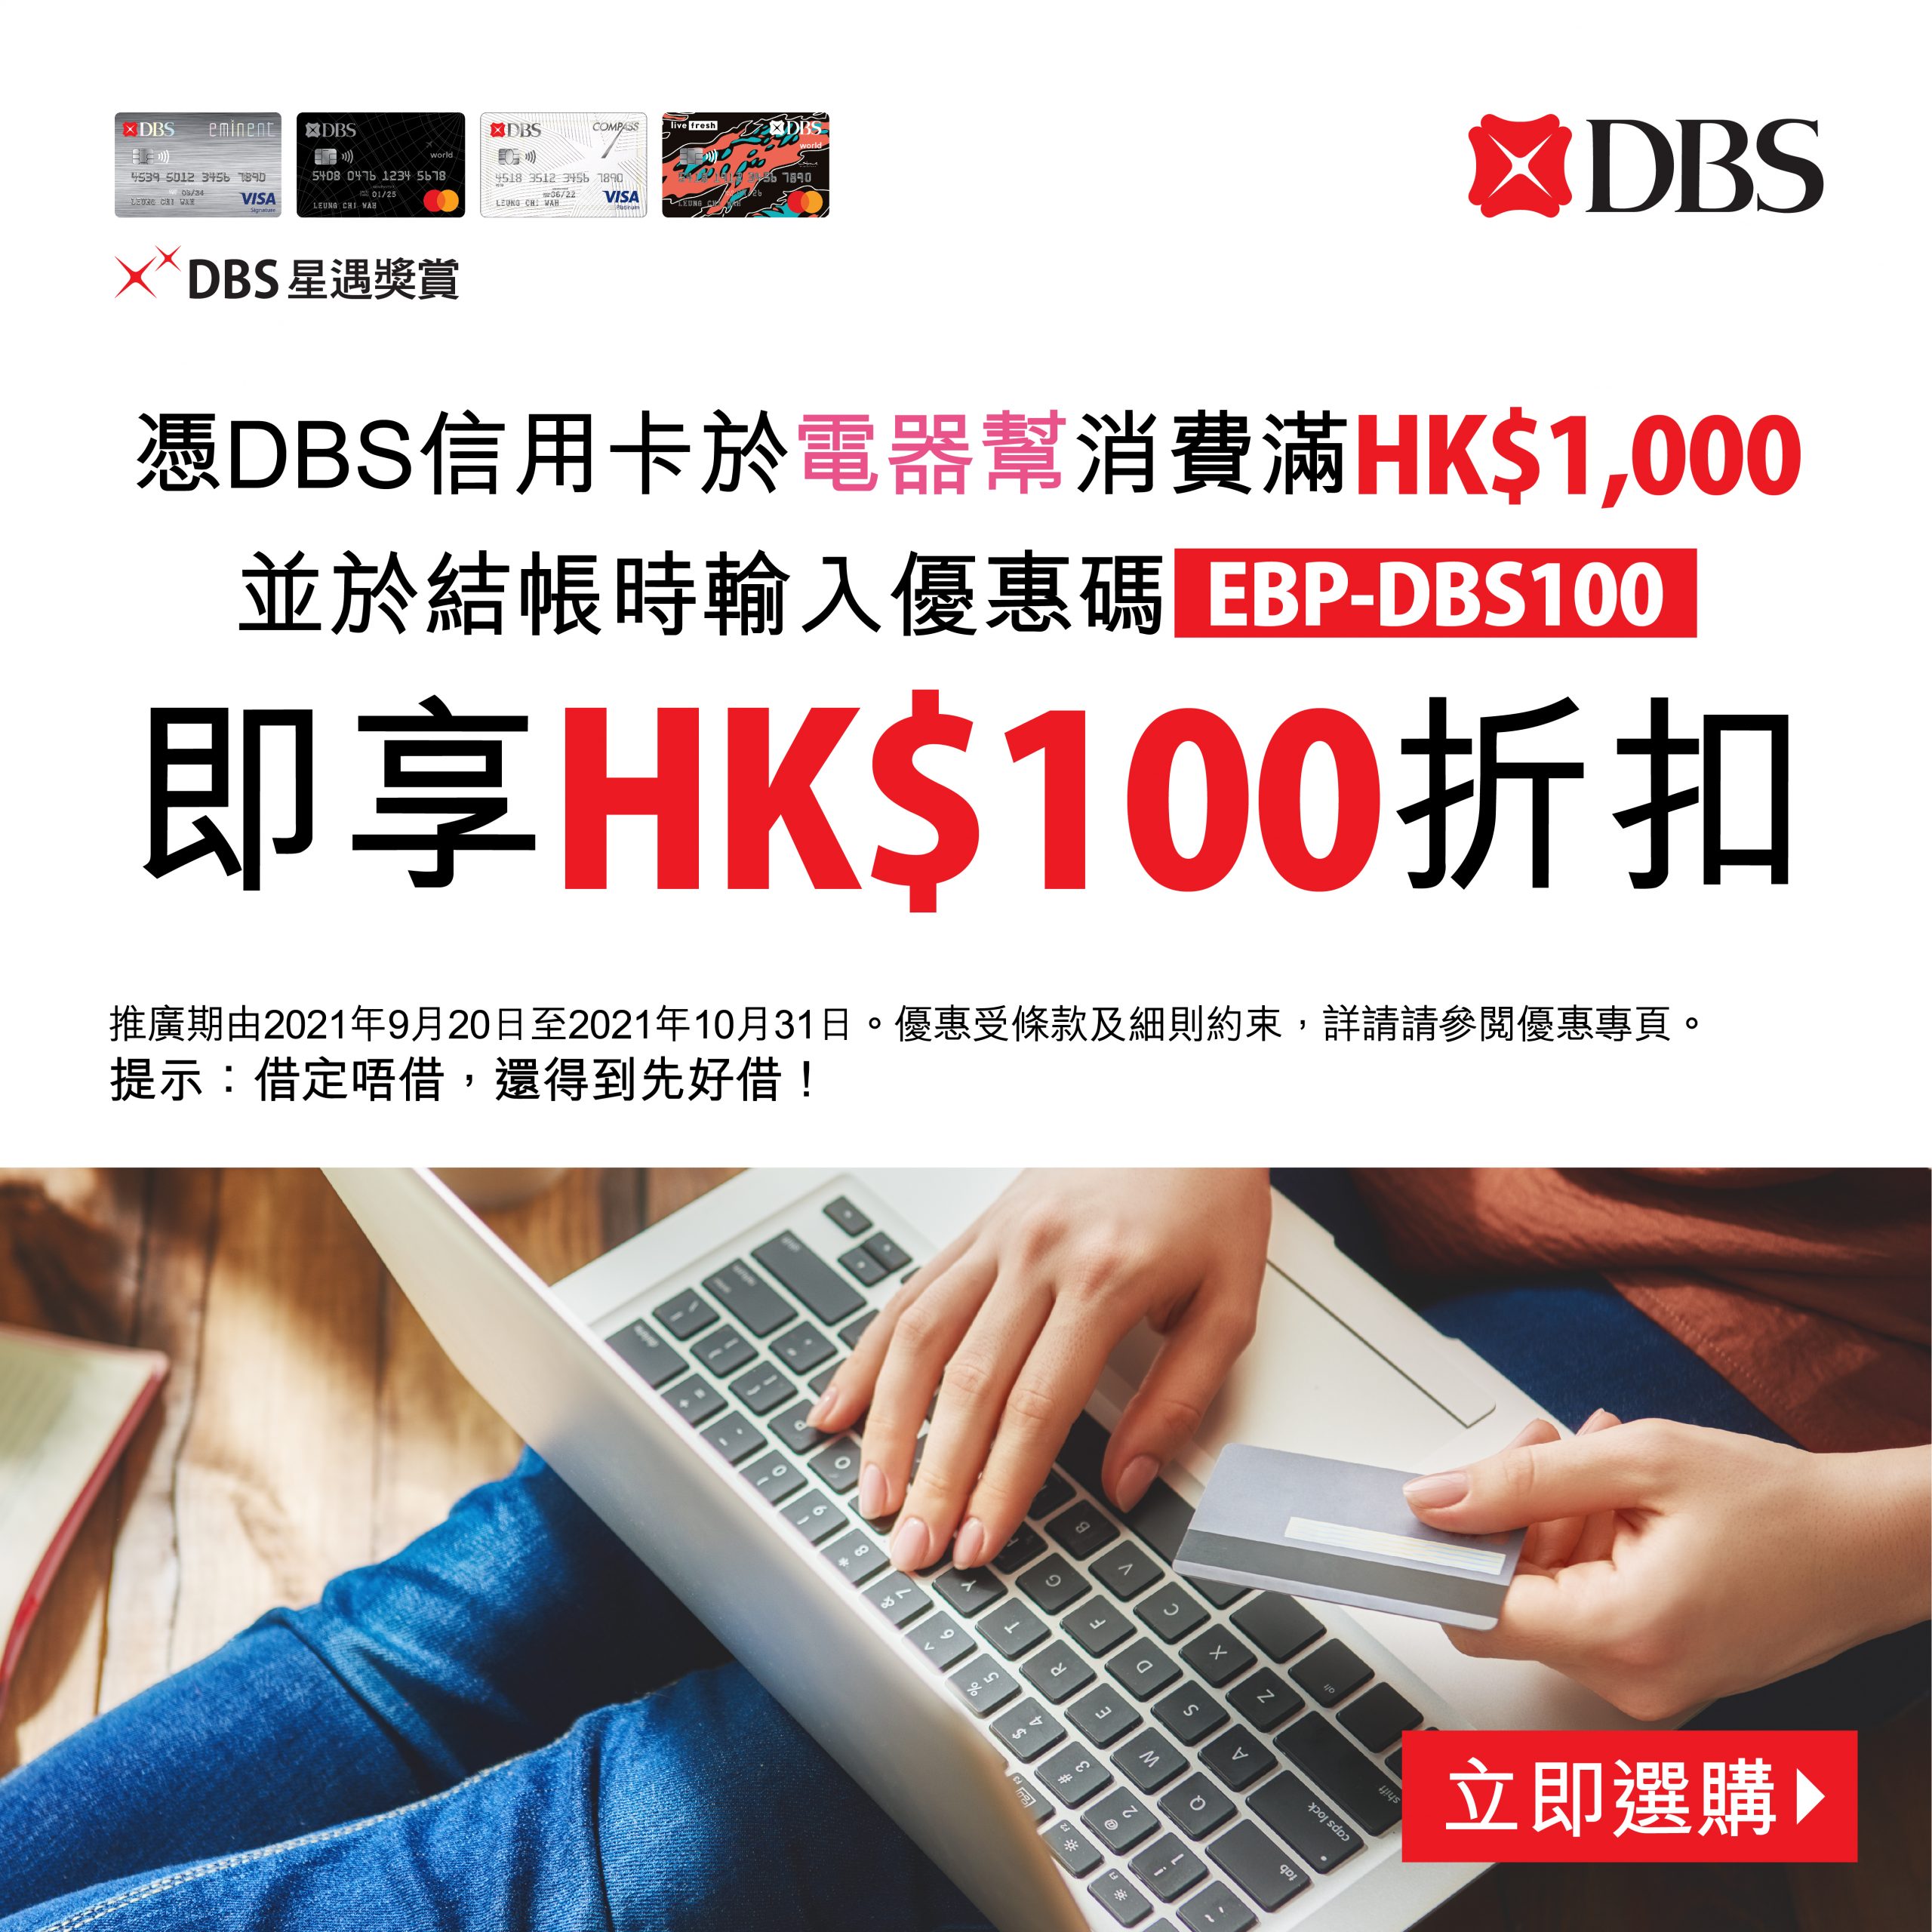 【DBS信用卡 電器幫Elecboy優惠碼】電器幫網上商店消費滿HK$1,000+輸入優惠碼 即減HK$100 指定產品更低至45折❗️